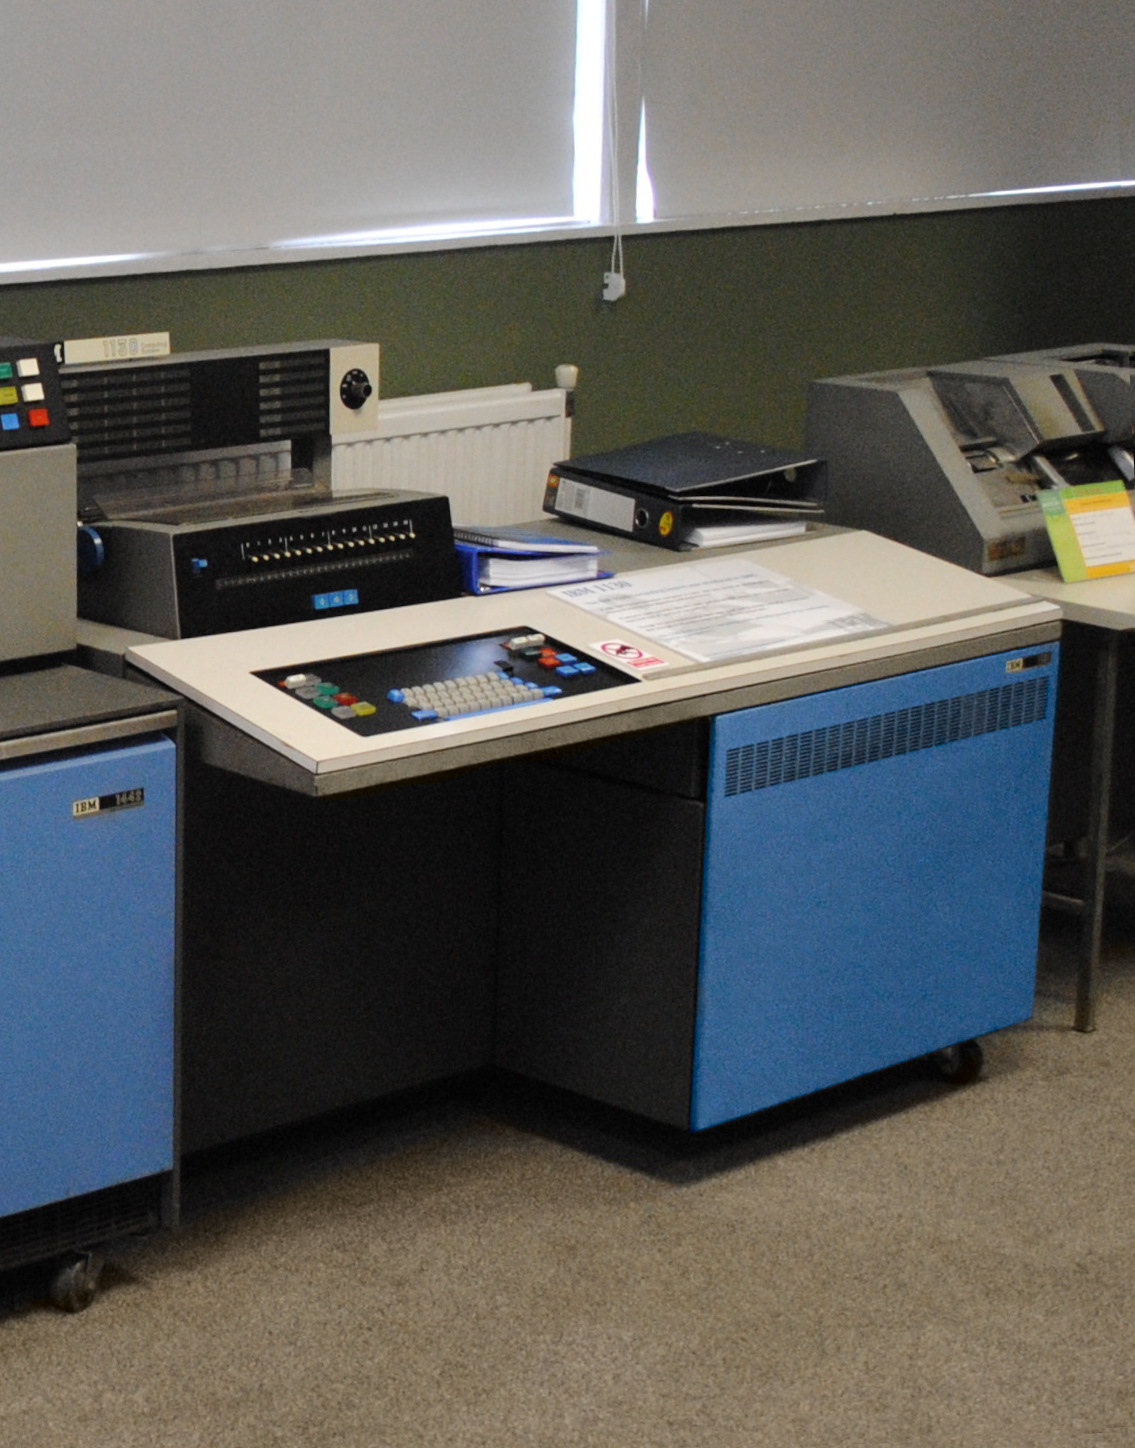 IBM 1130 - Wikipedia